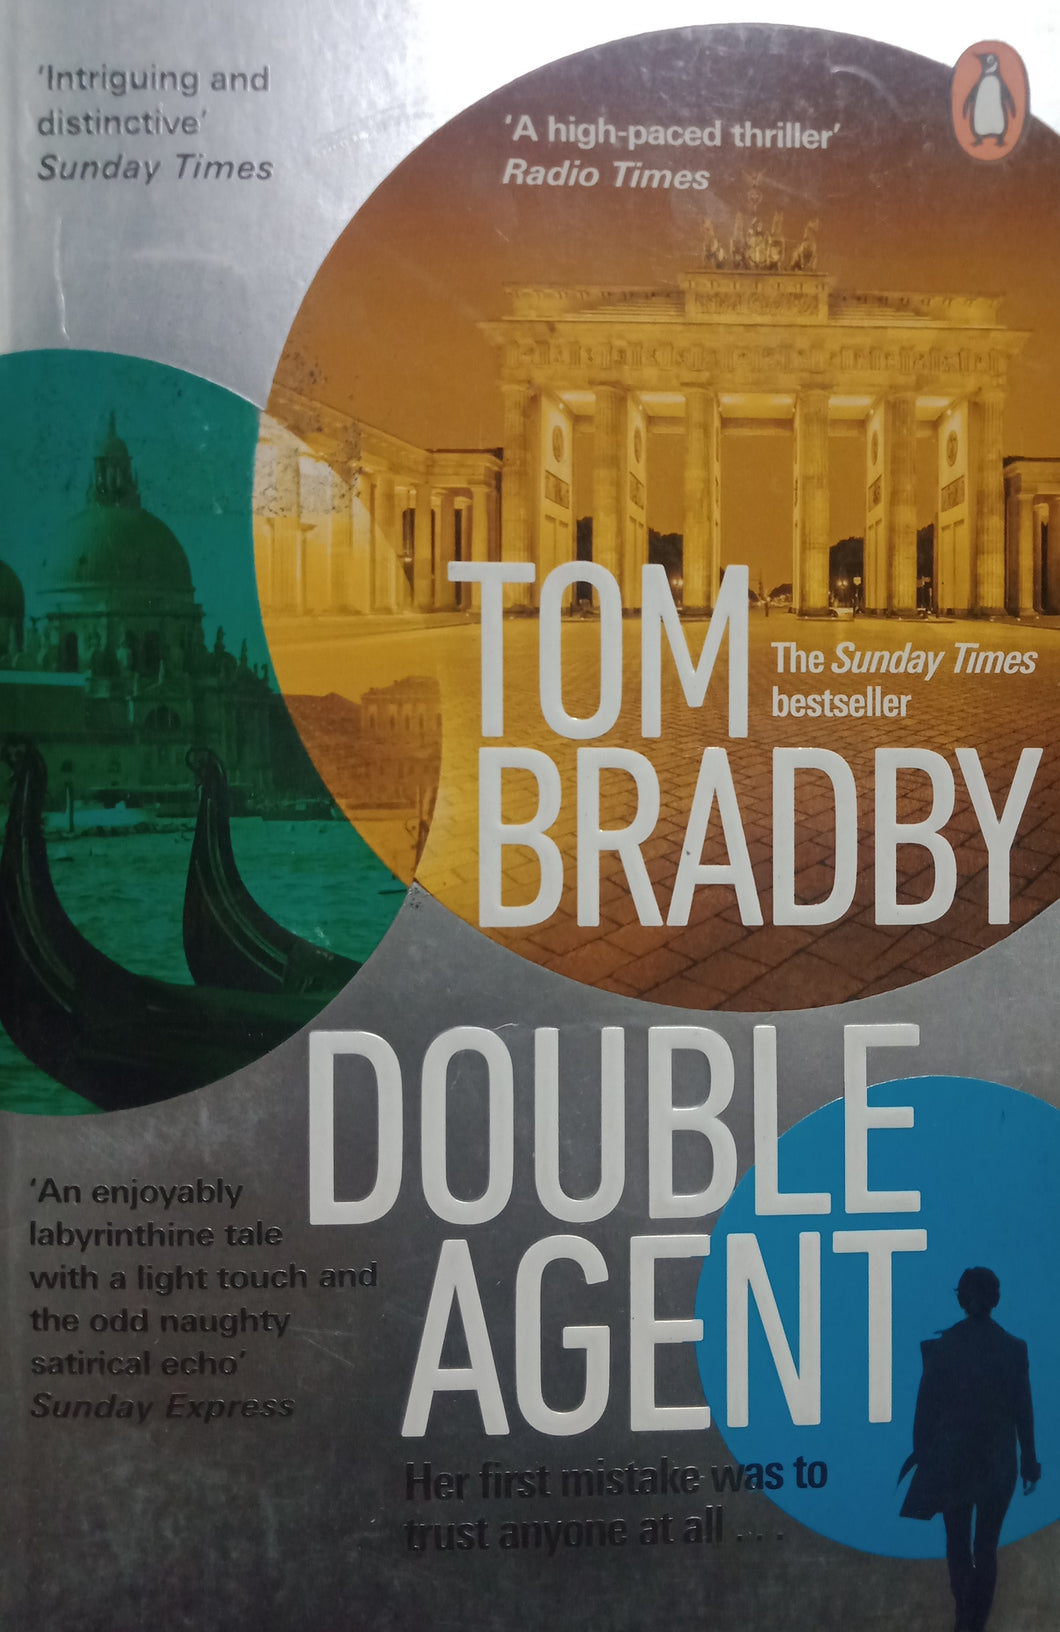 Double Agent by Tom Bradby